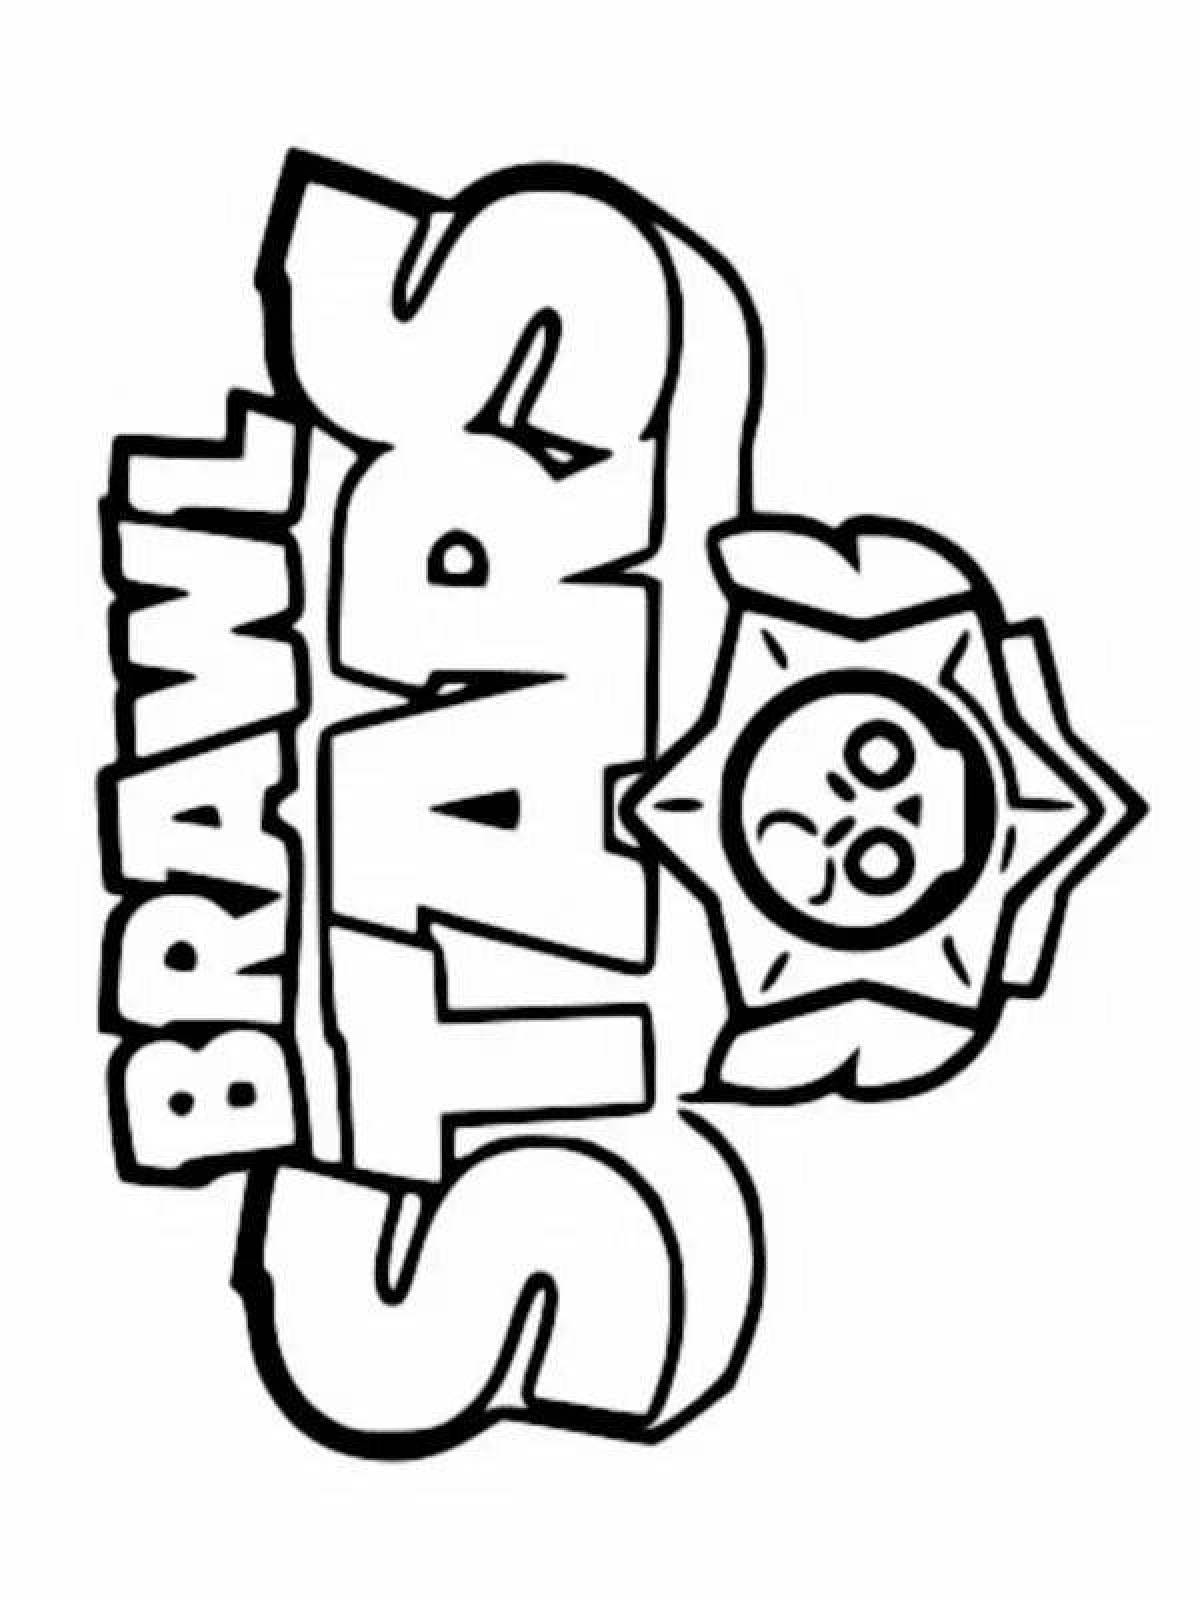 Bravo stars logo #11